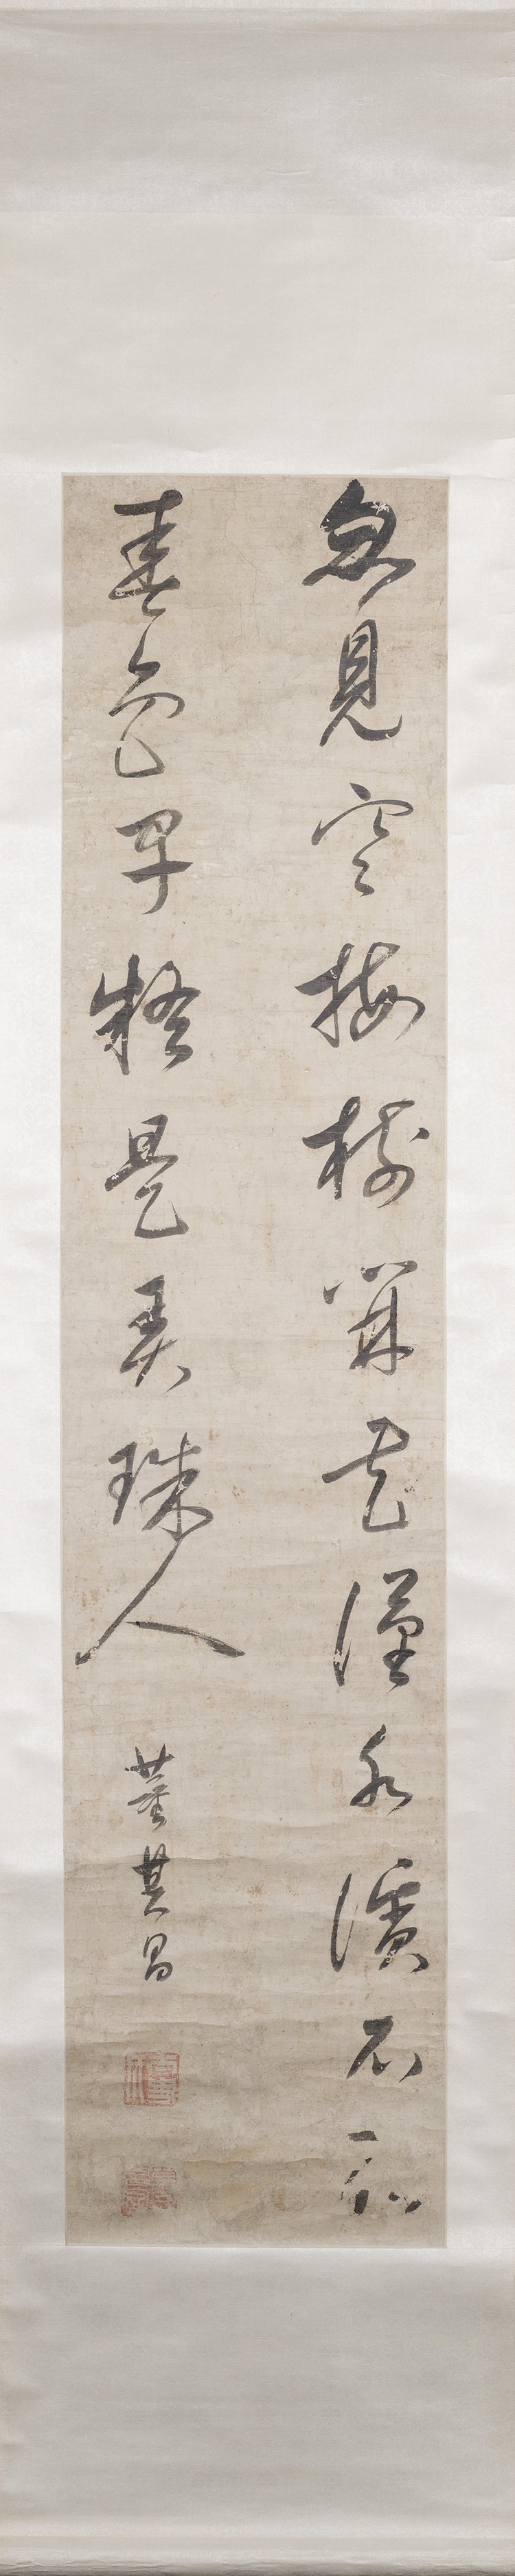 Calligraphy par After Dong Qichang